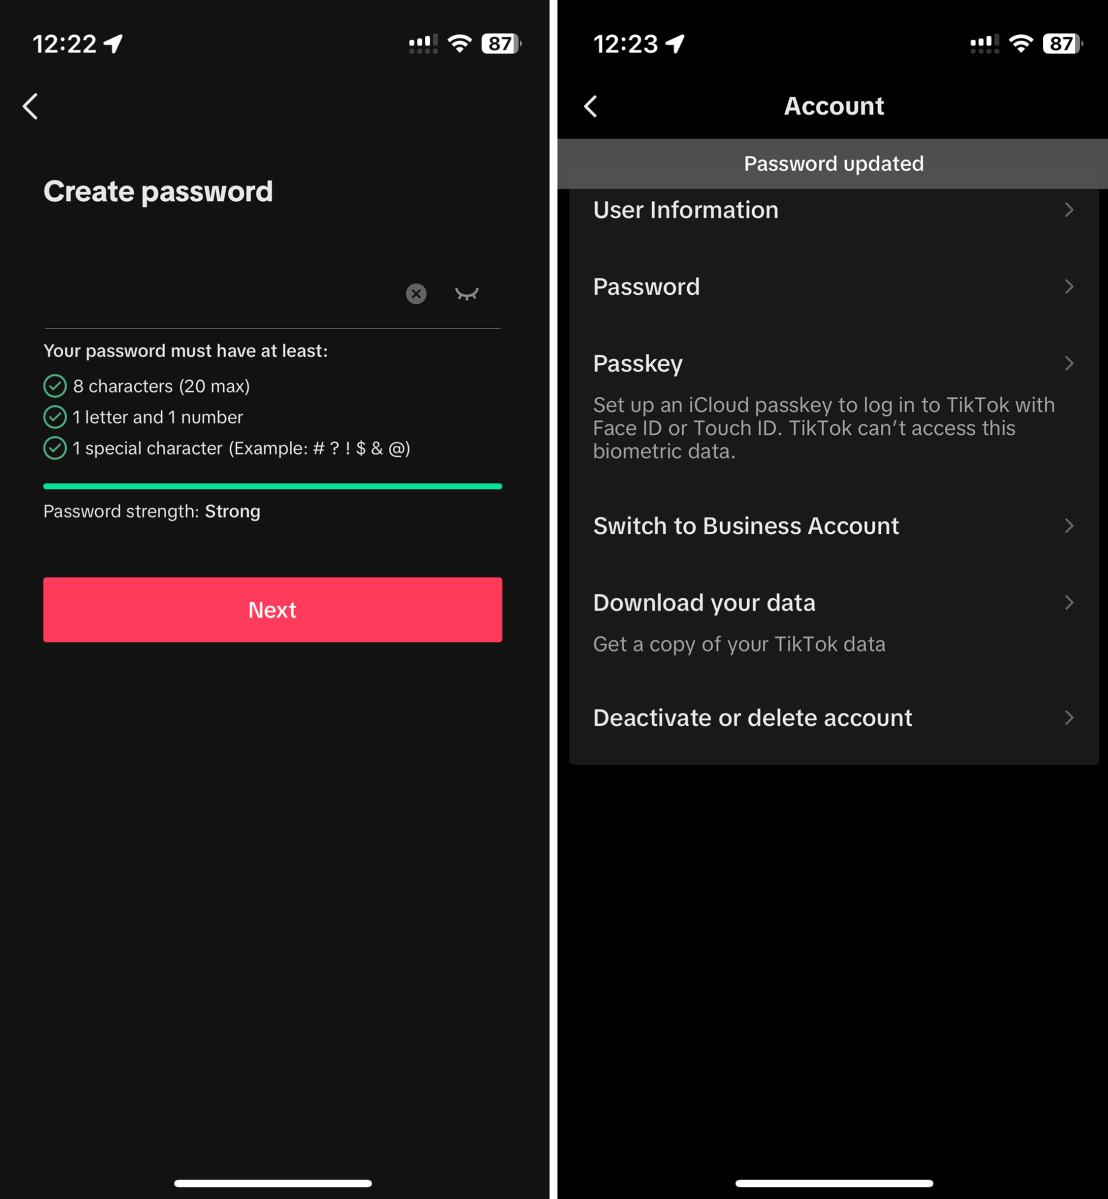 Screenshots of TikTok password changing process